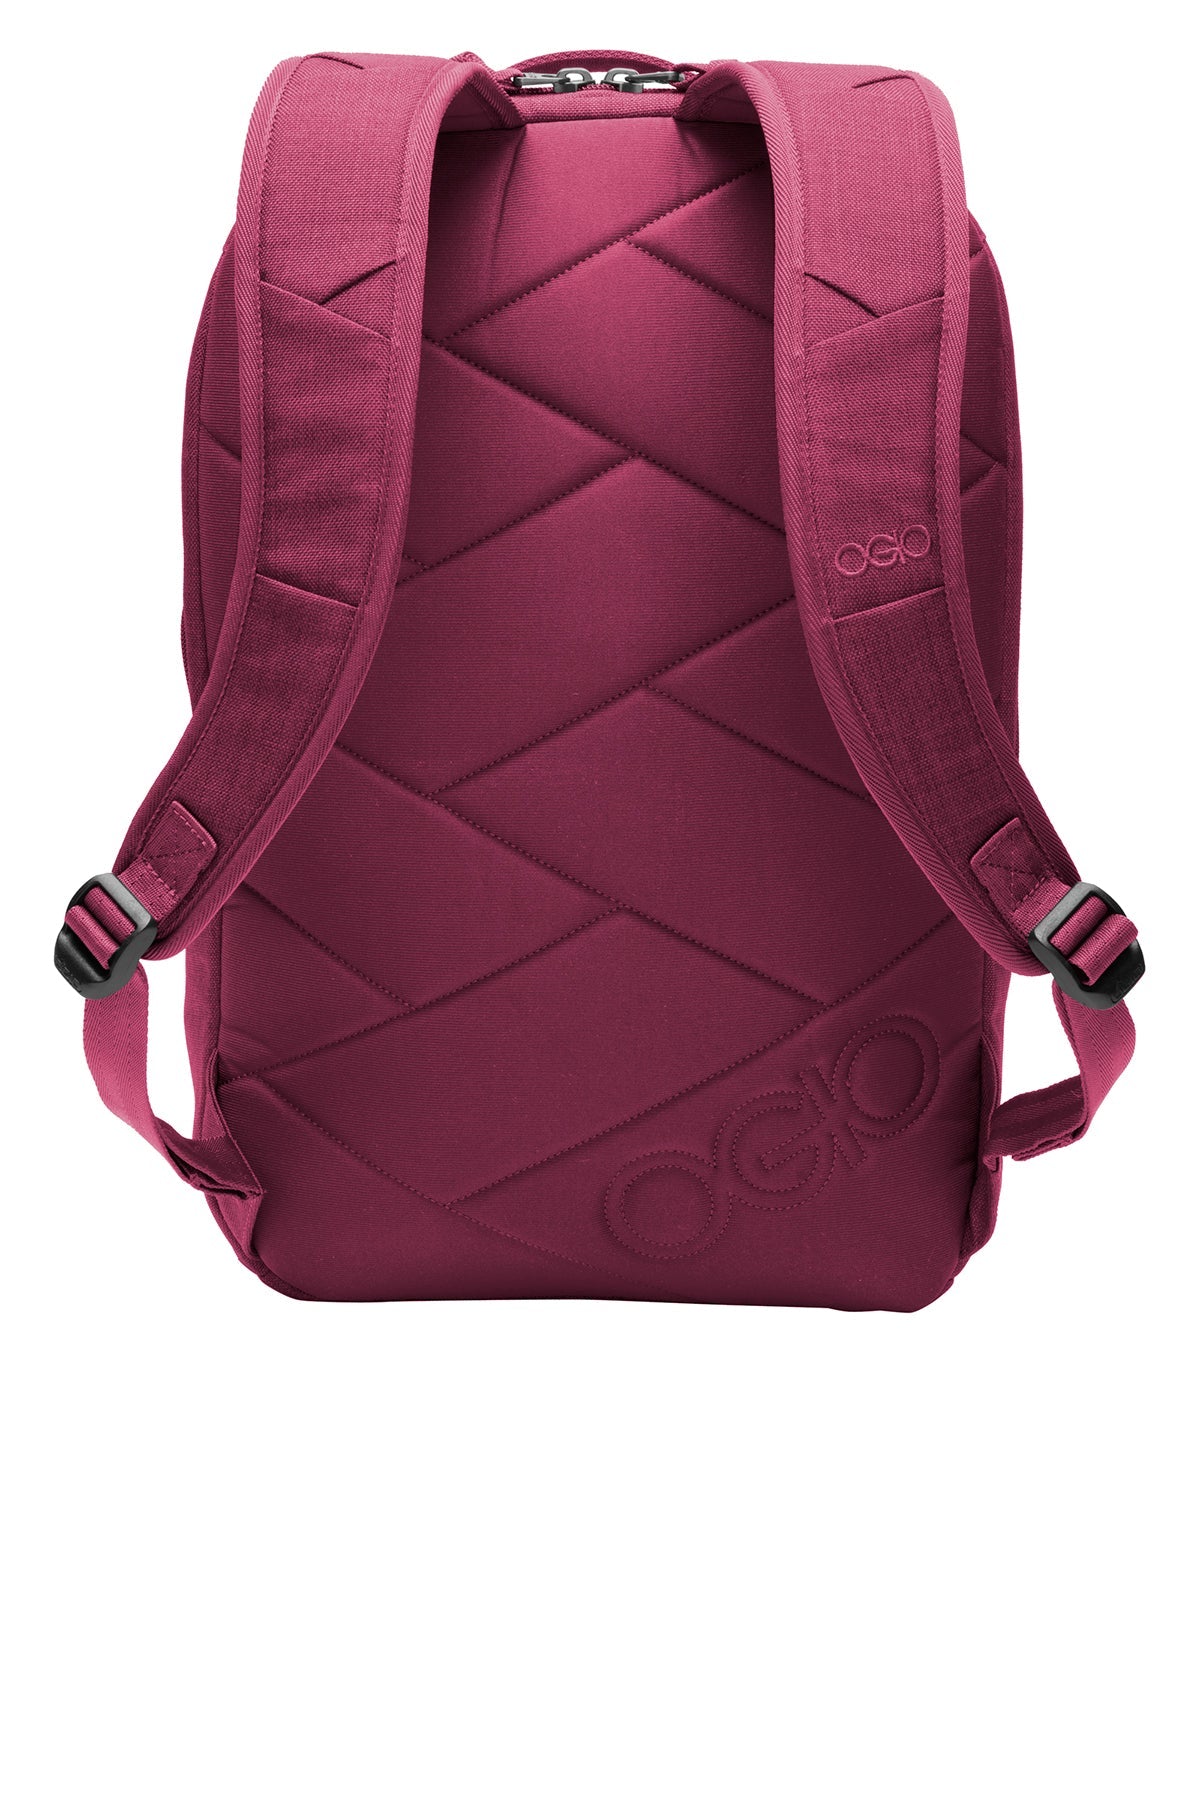 OGIO Ladies Melrose Customzied Backpacks, Sunset